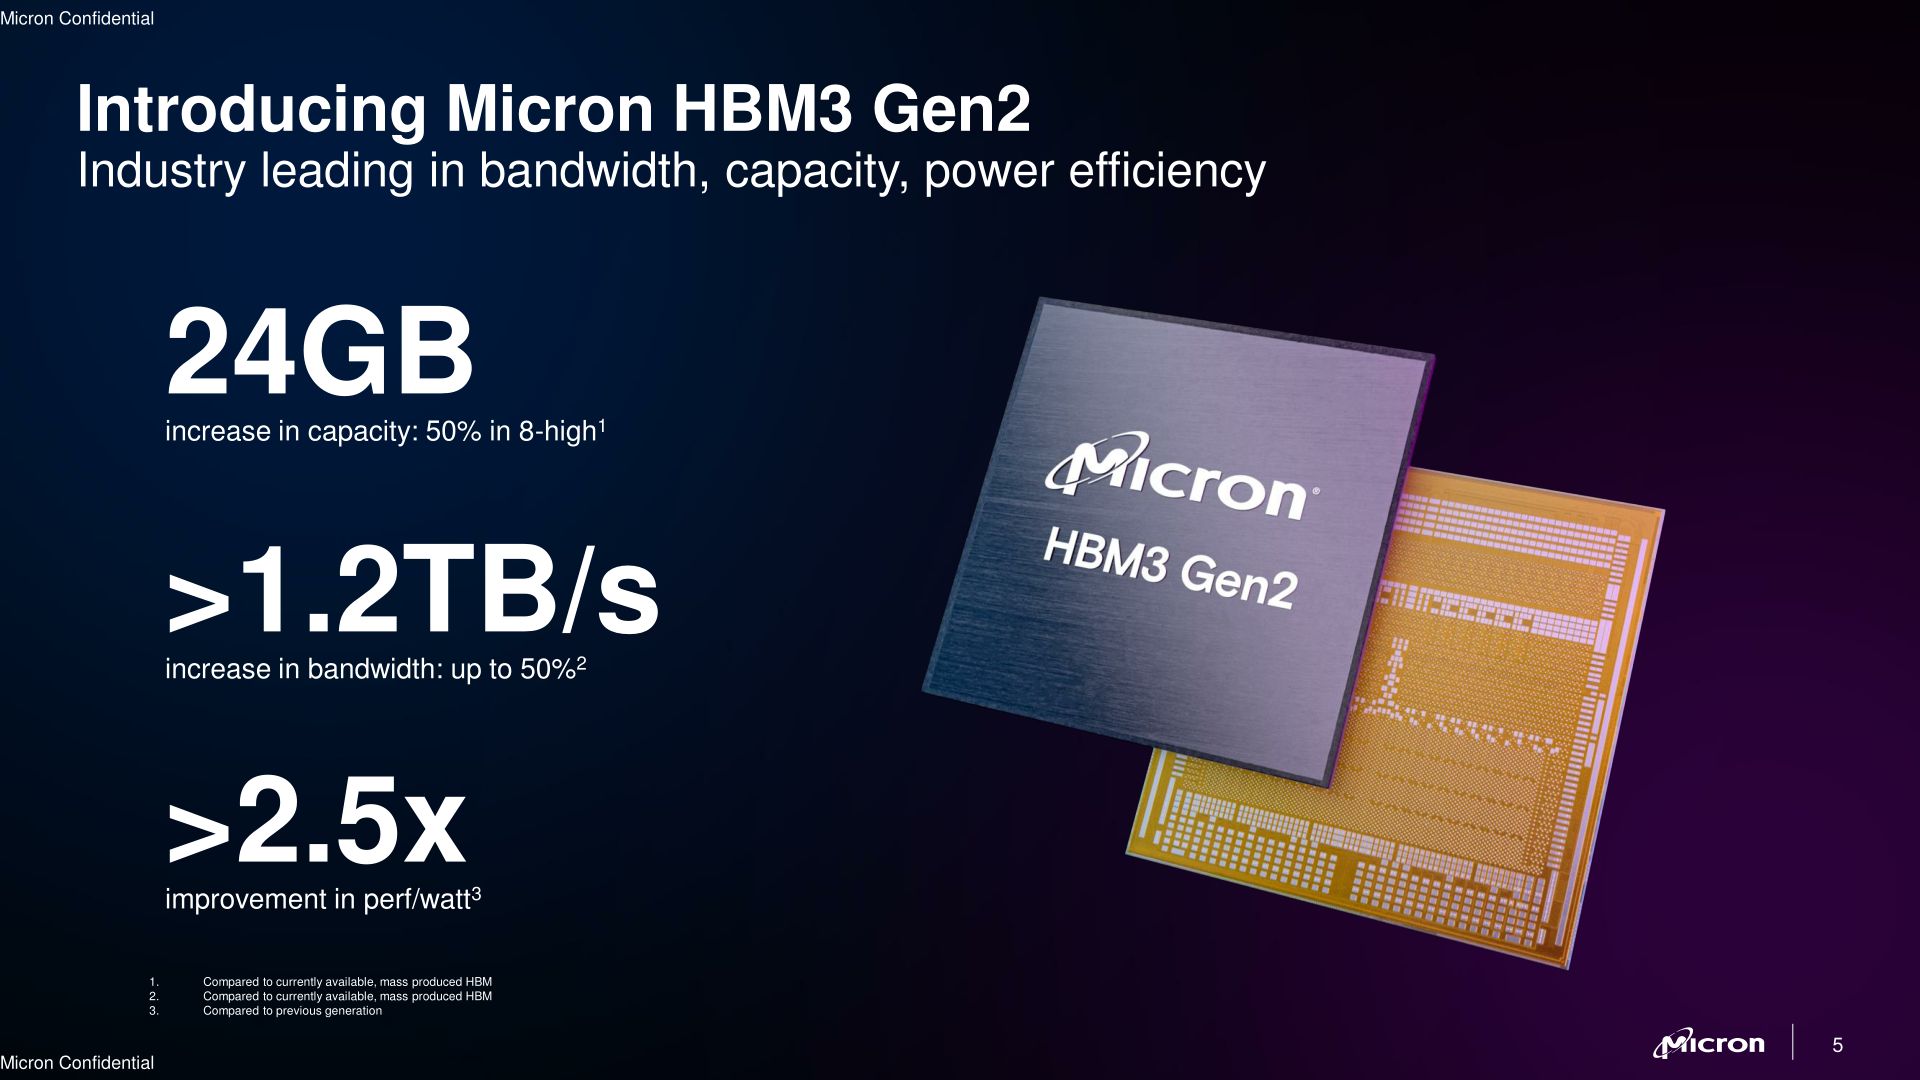 High Bandwidth Memory (HBM): Unleashing the power of next-gen